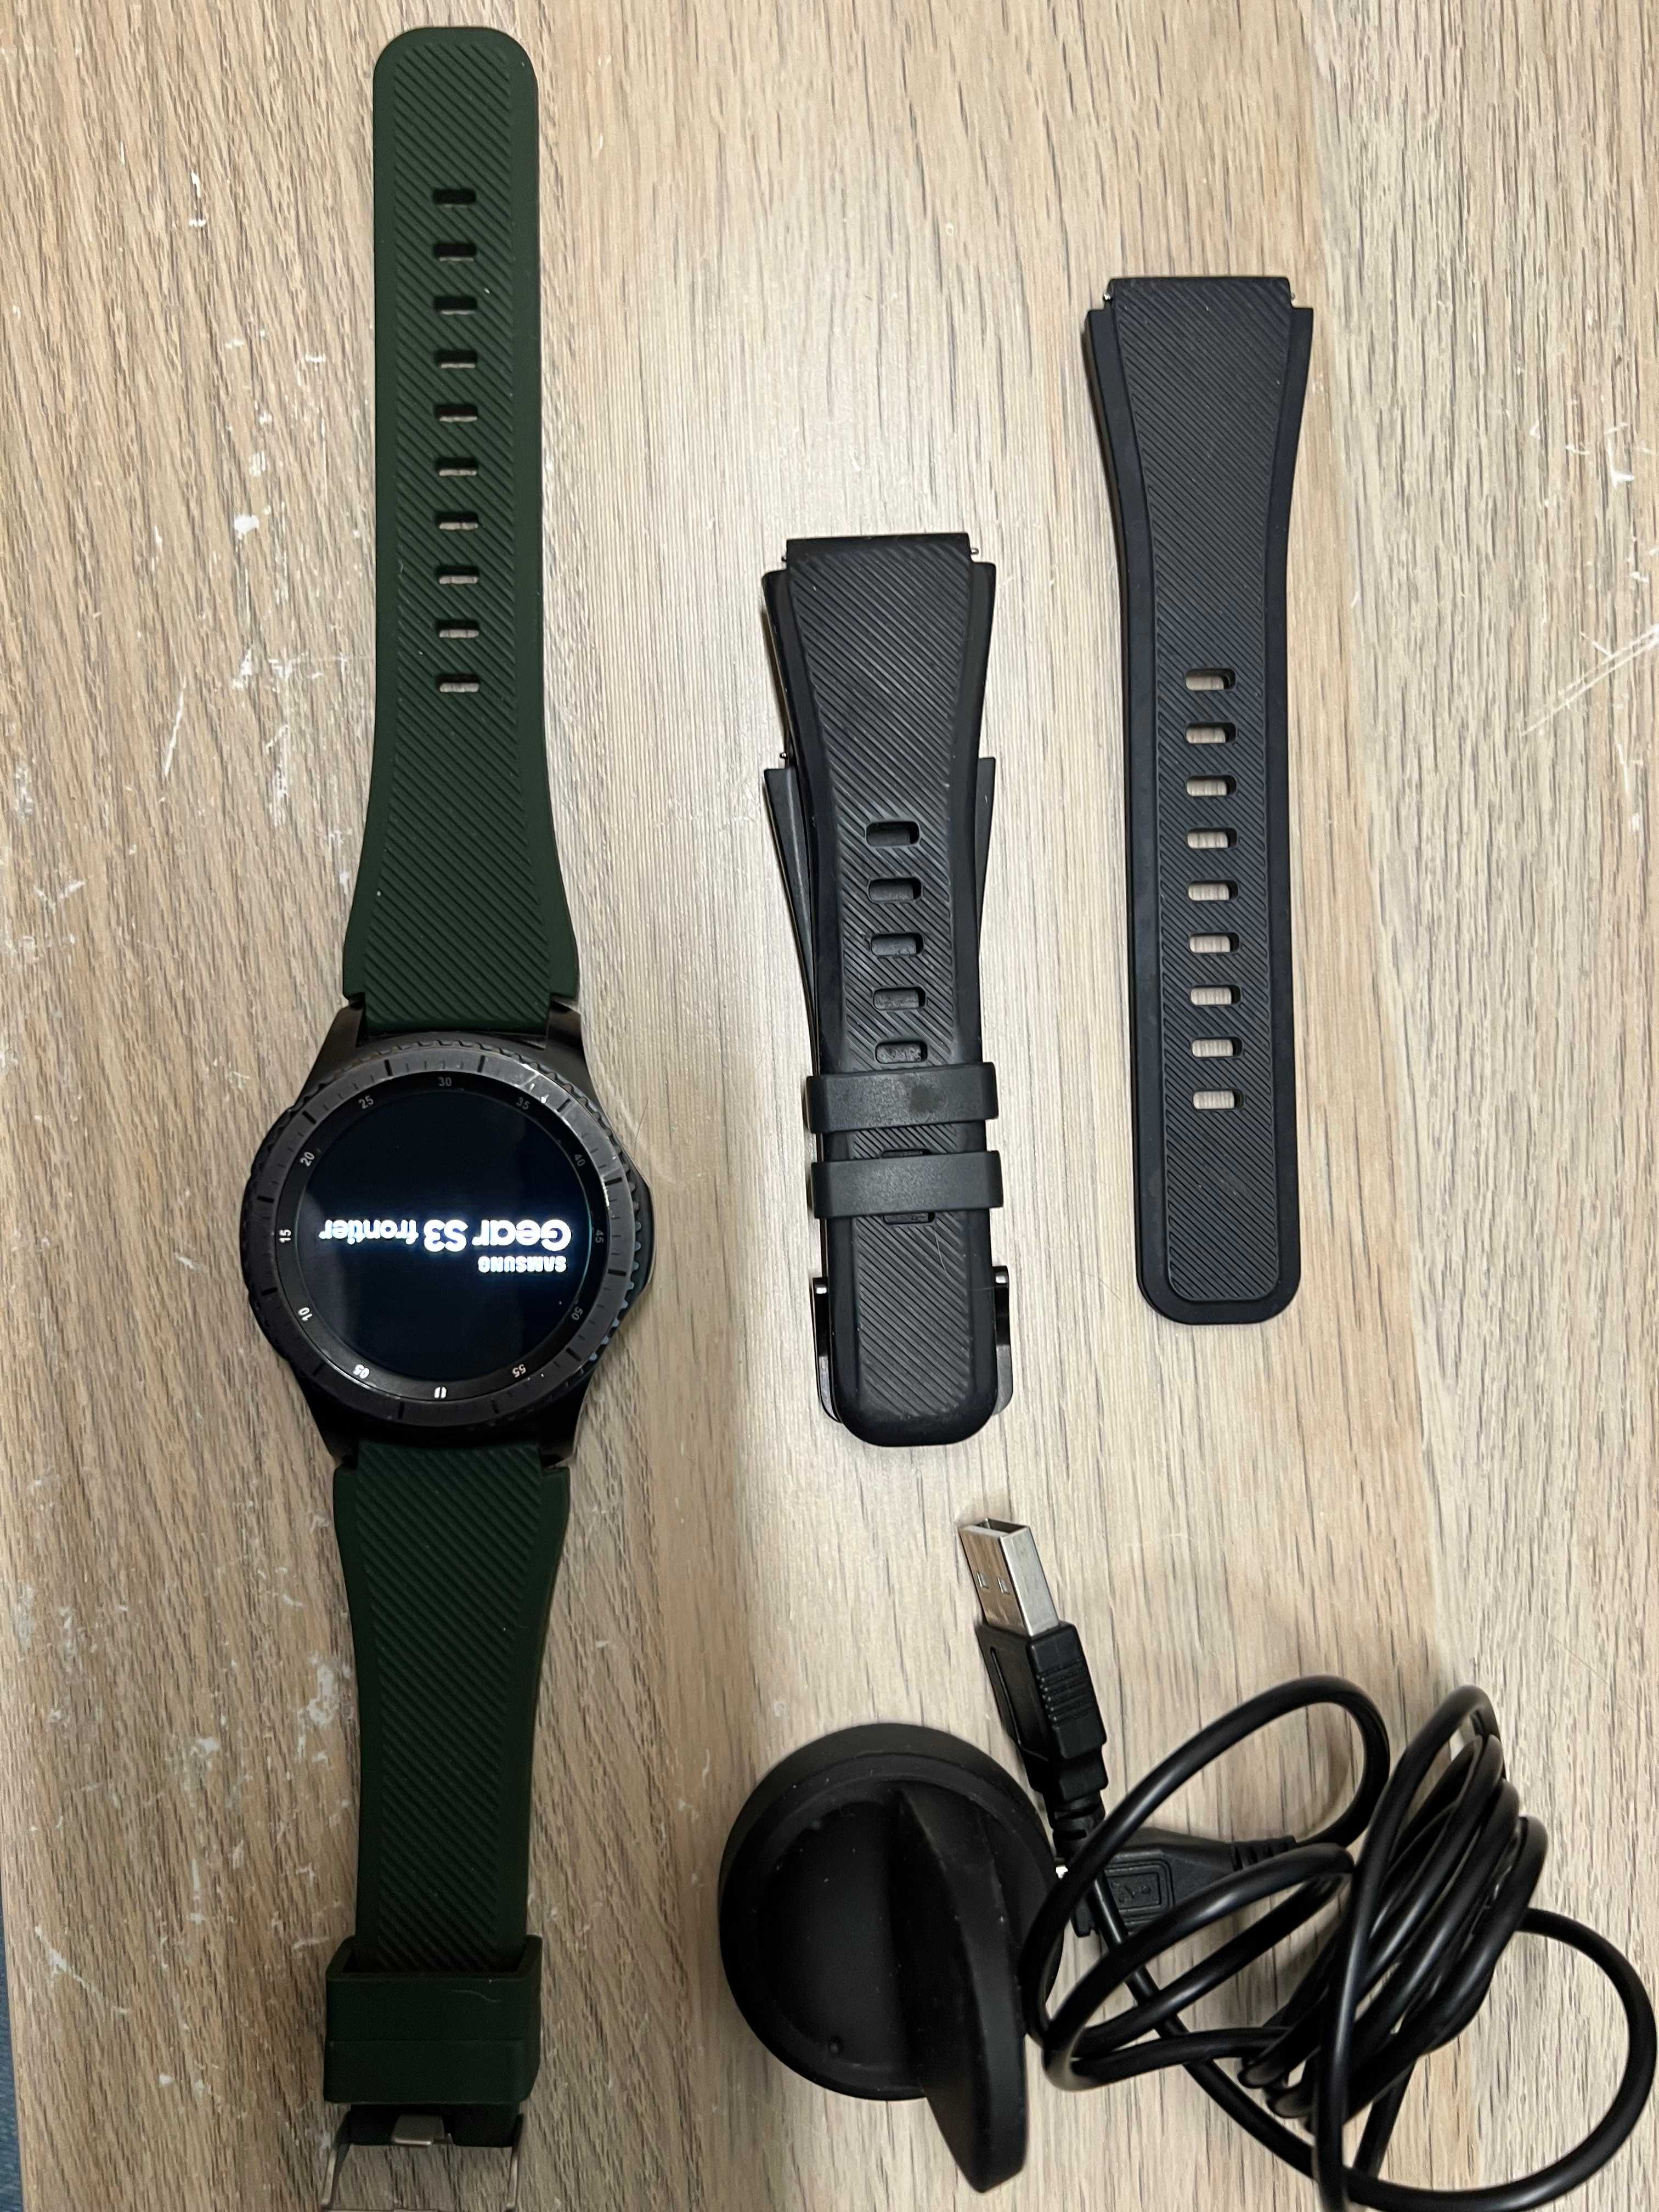 Samsung Smart Watch Gear S3 Frontier